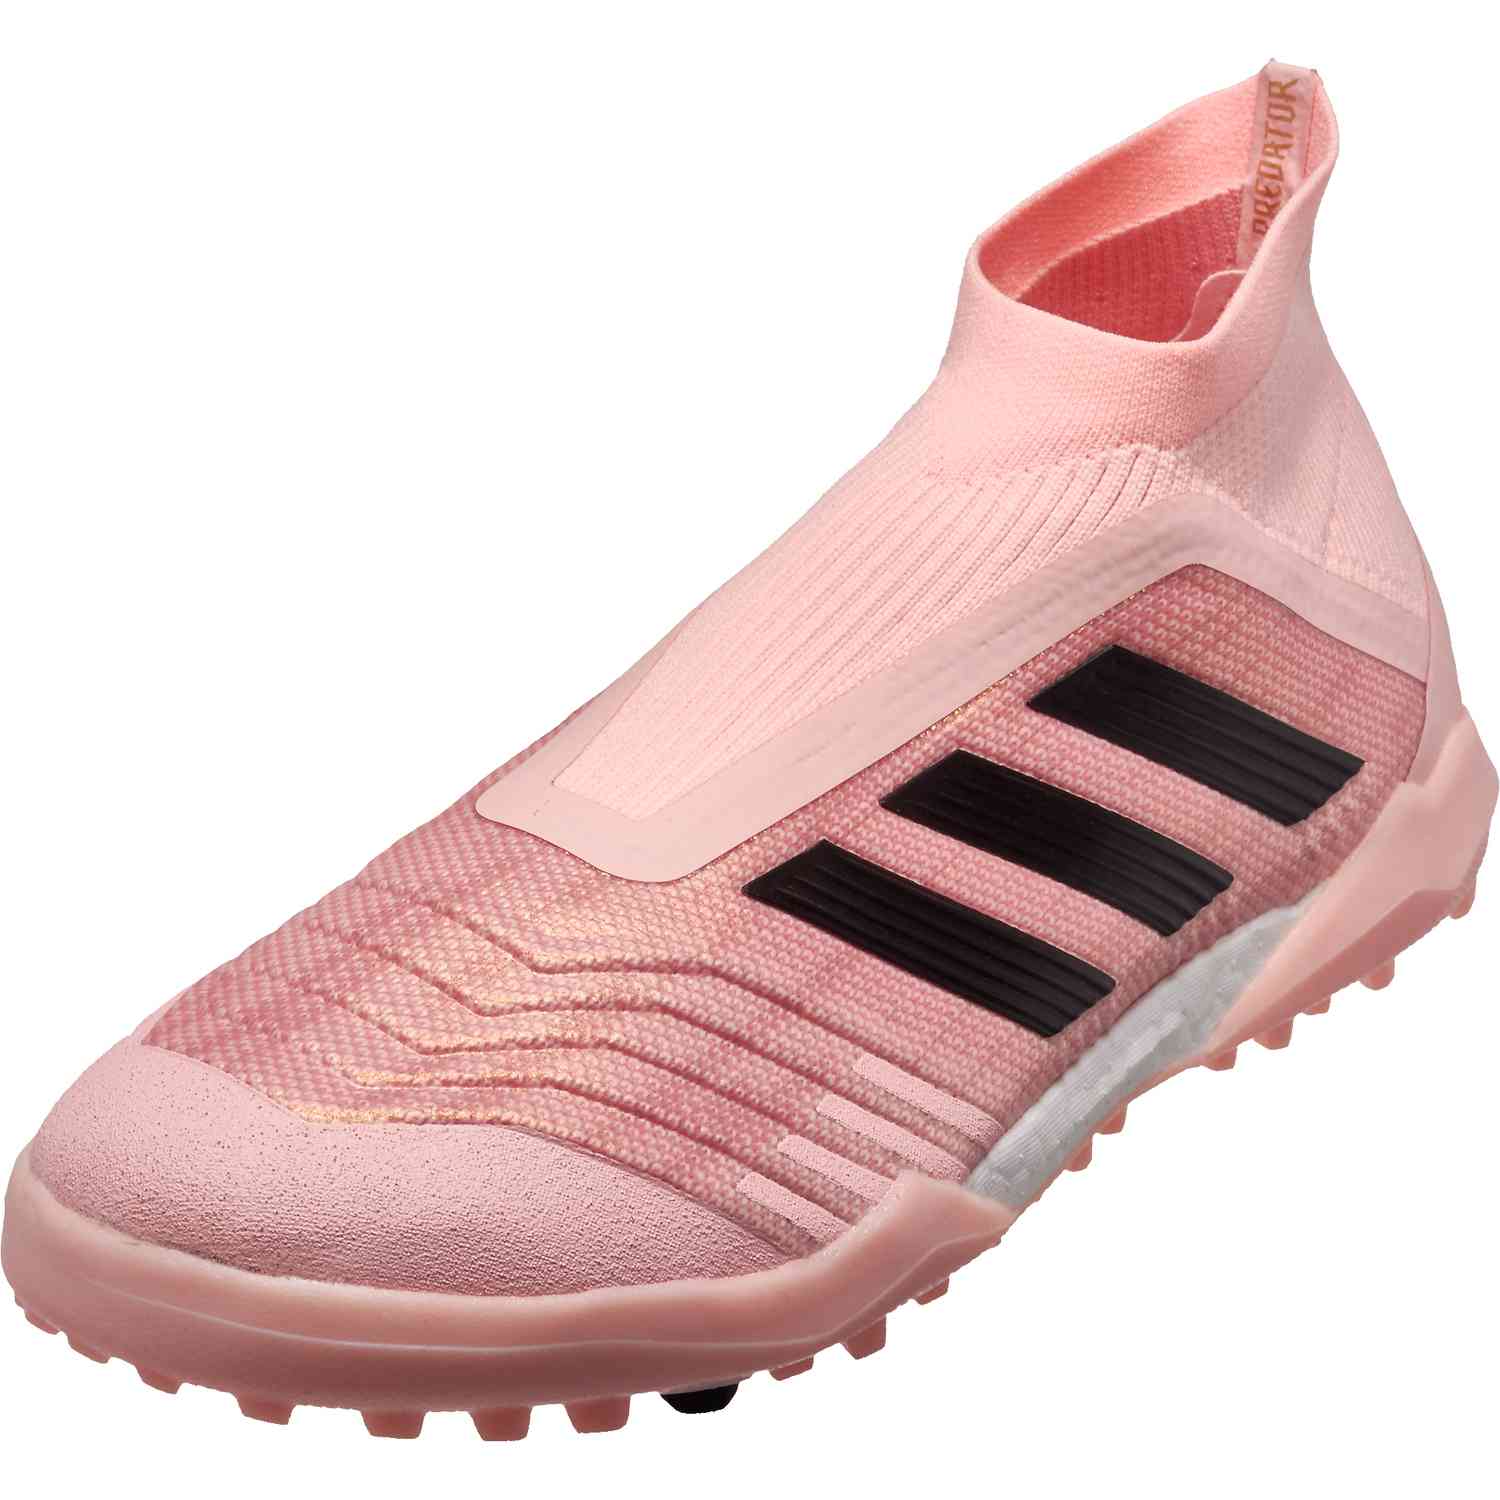 adidas predator pink kids